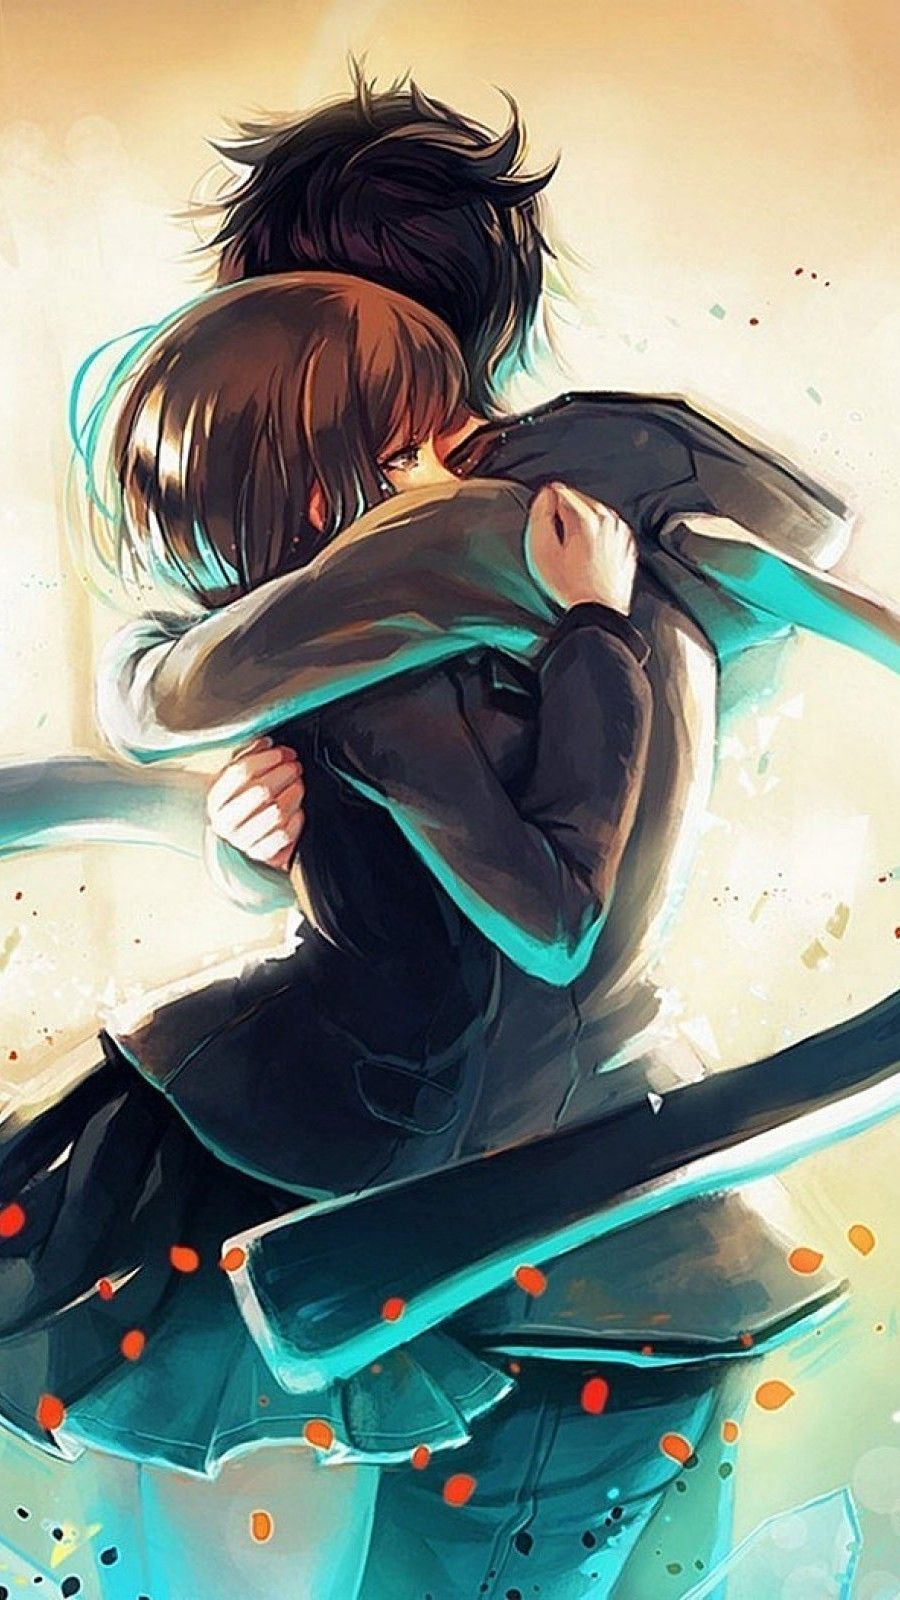 Anime Couple - Hug Picture #91868166 | Blingee.com